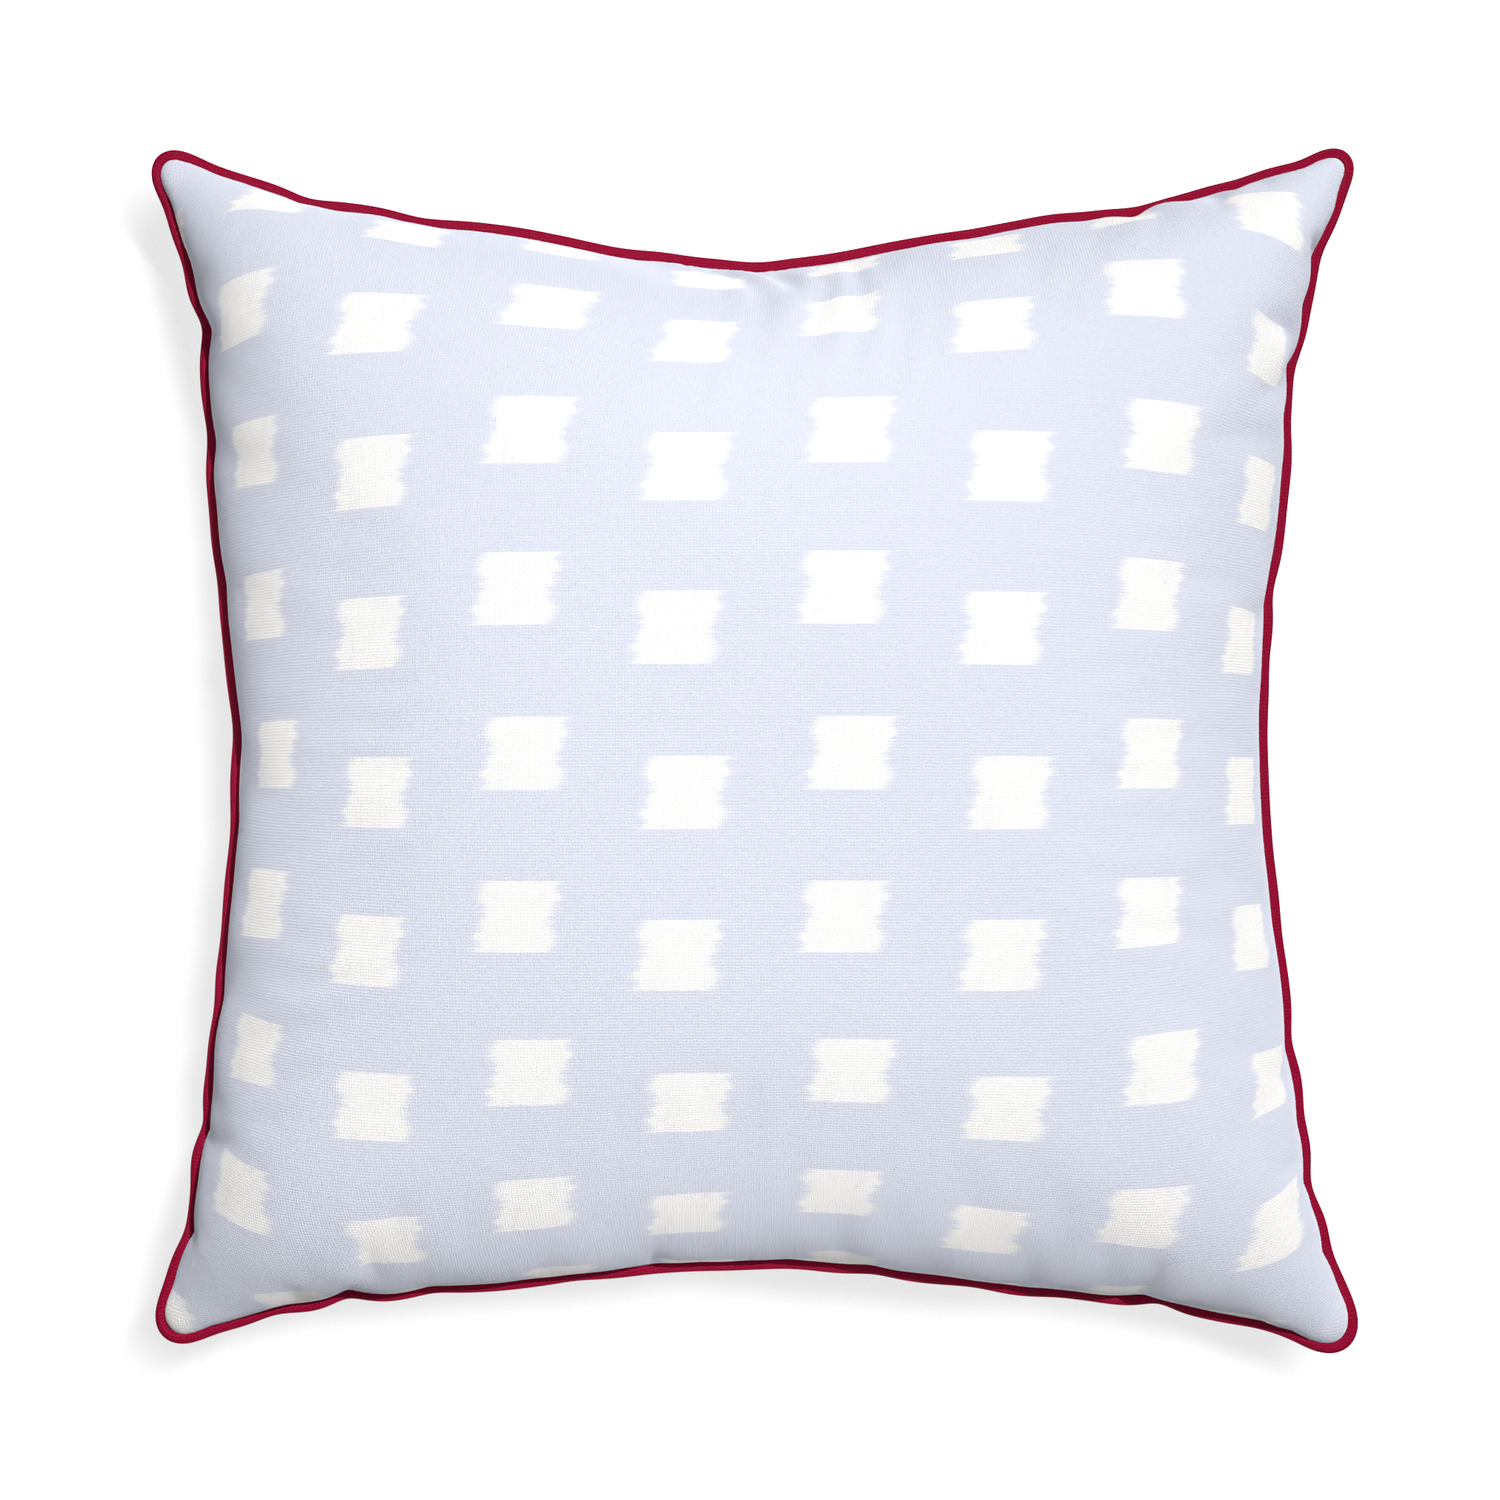 Euro-sham denton custom pillow with raspberry piping on white background